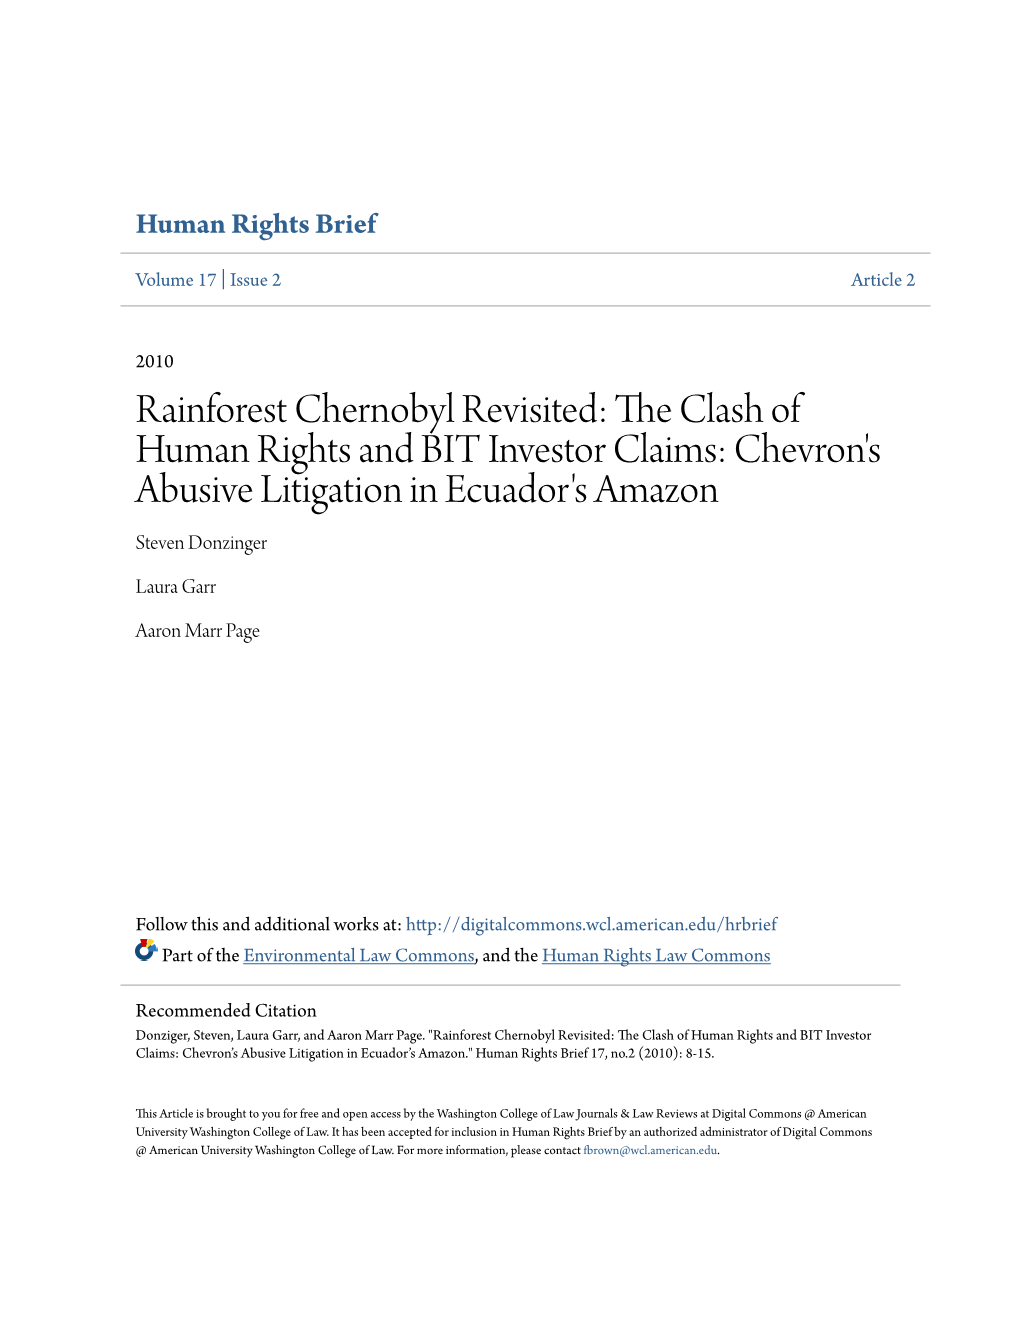 The Clash of Human Rights and BIT Investor Claims: Chevron’S Abusive Litigation in Ecuador’S Amazon